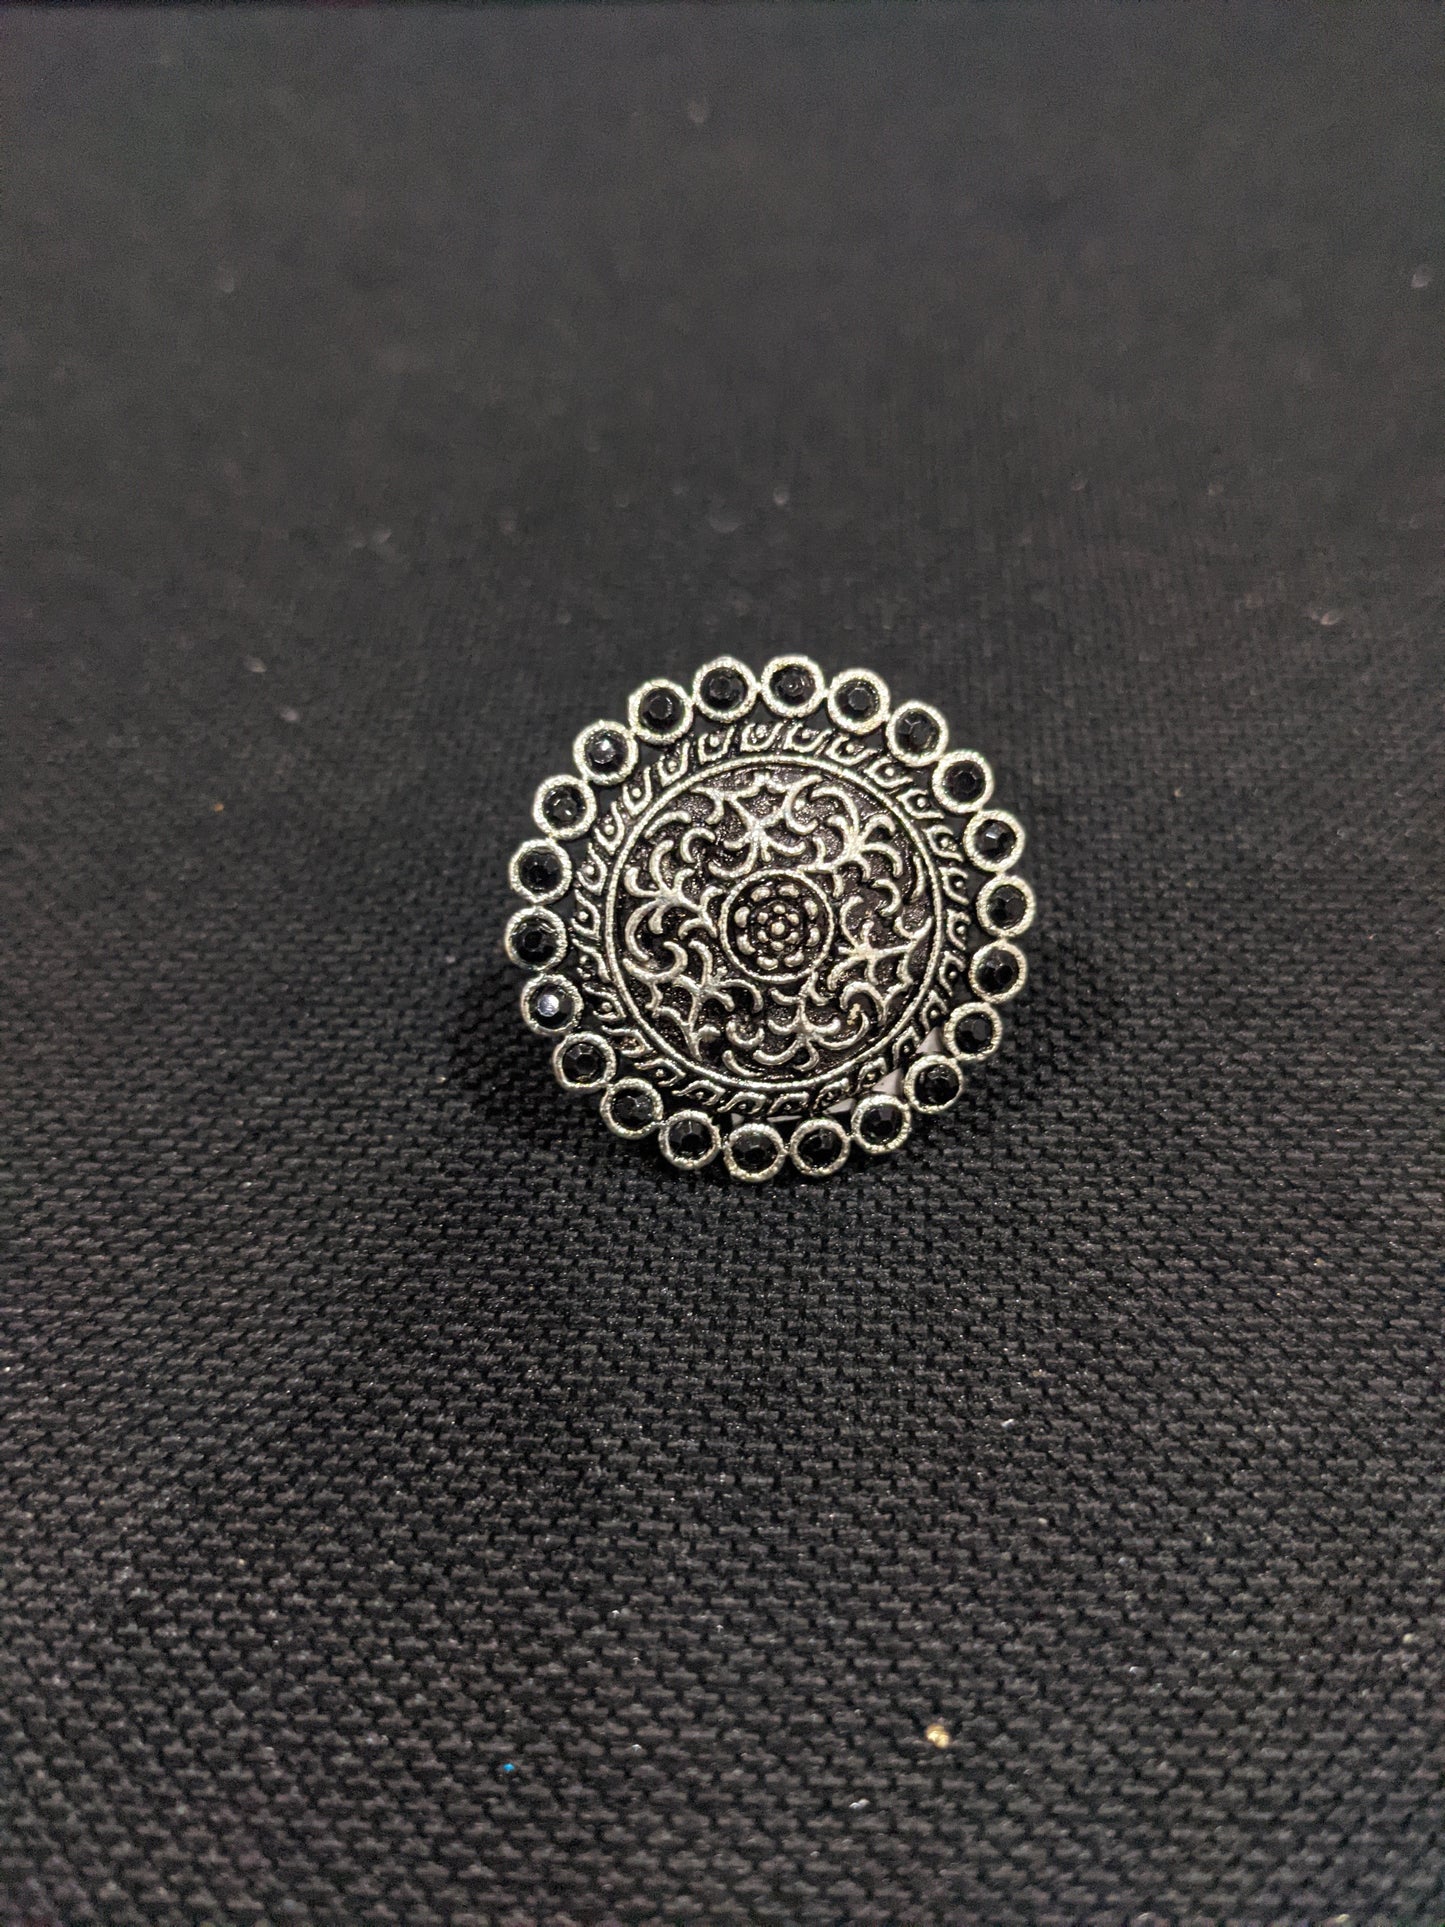 Oxidized silver round polki stone Adjustable Finger ring - Simpliful